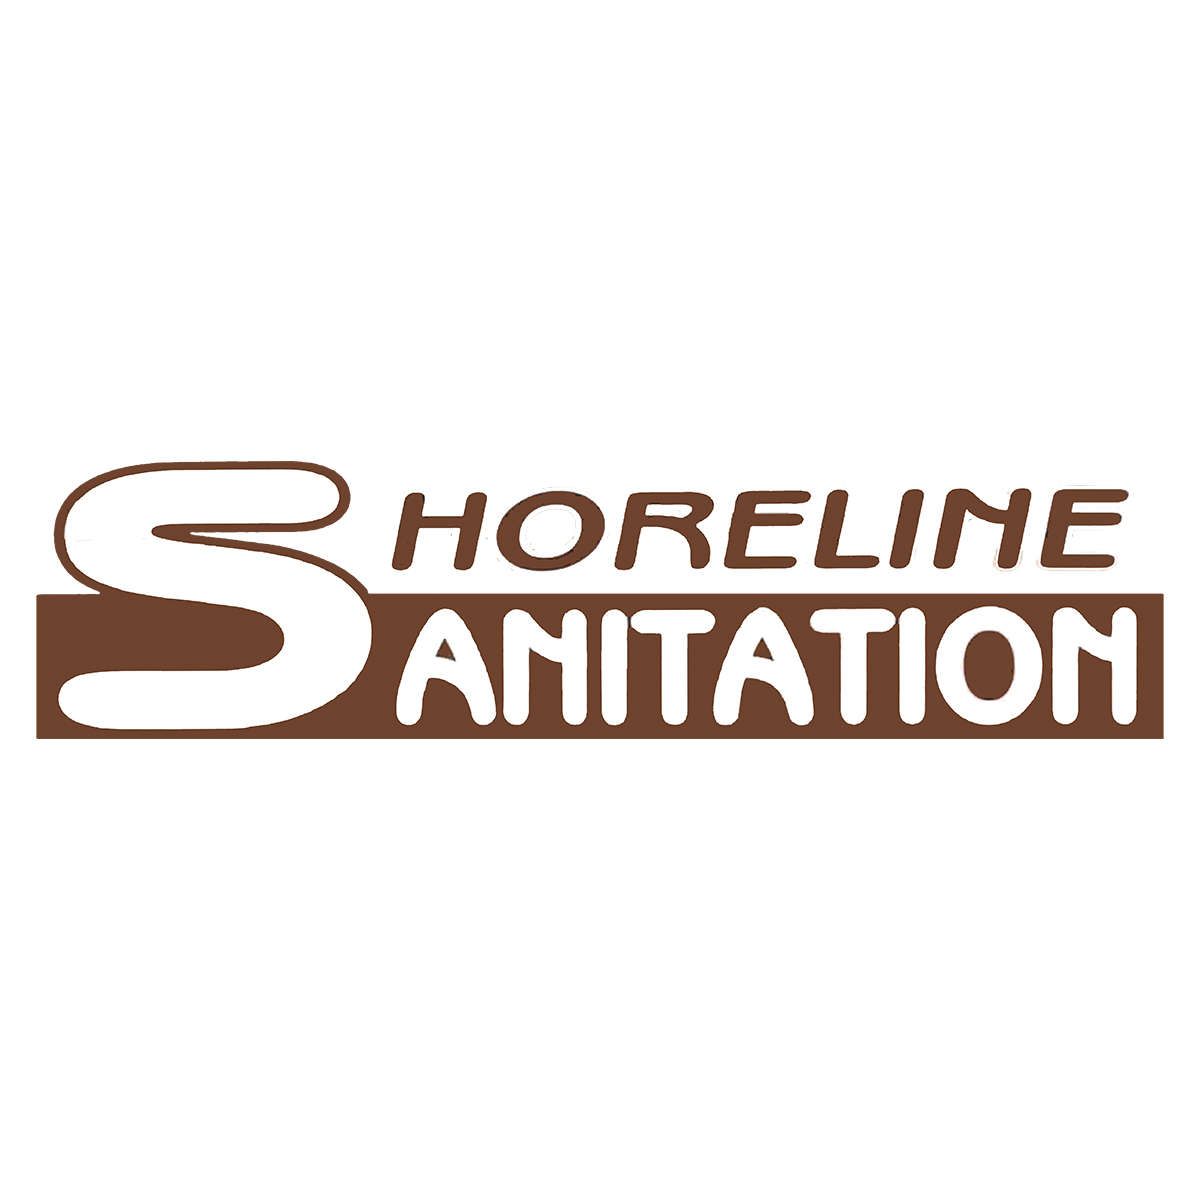 Shoreline Sanitation Logo